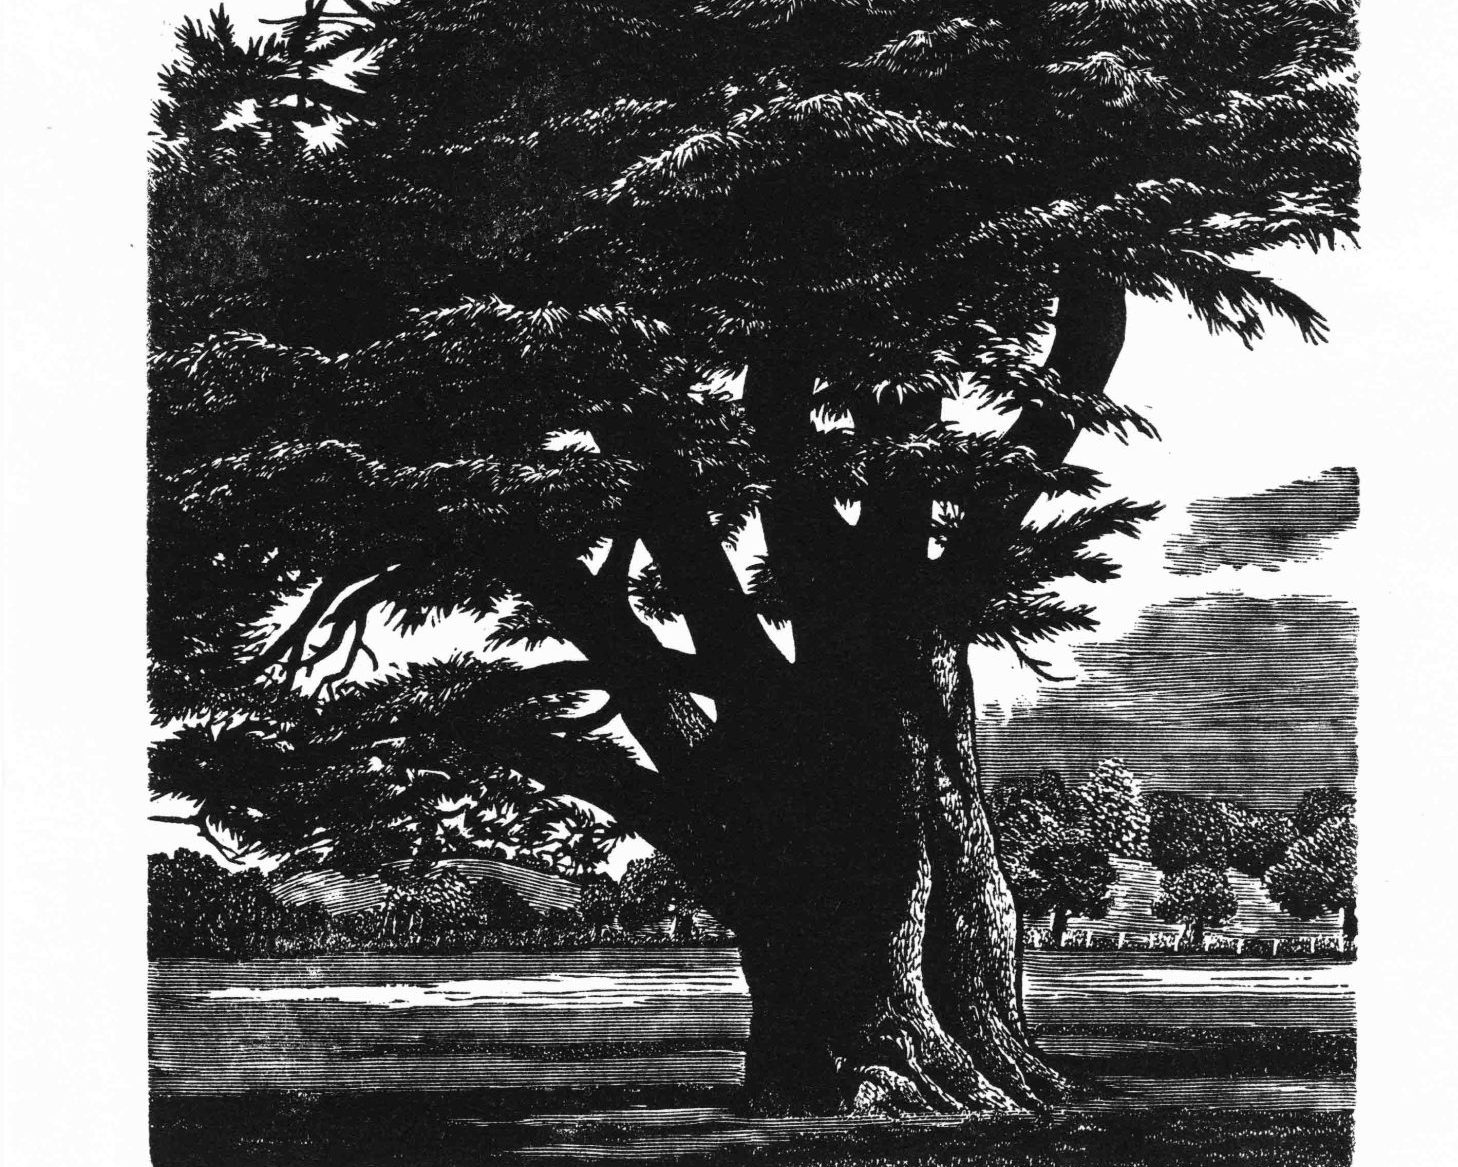 An image of print wood engraving in black ink of a large cedar tree.